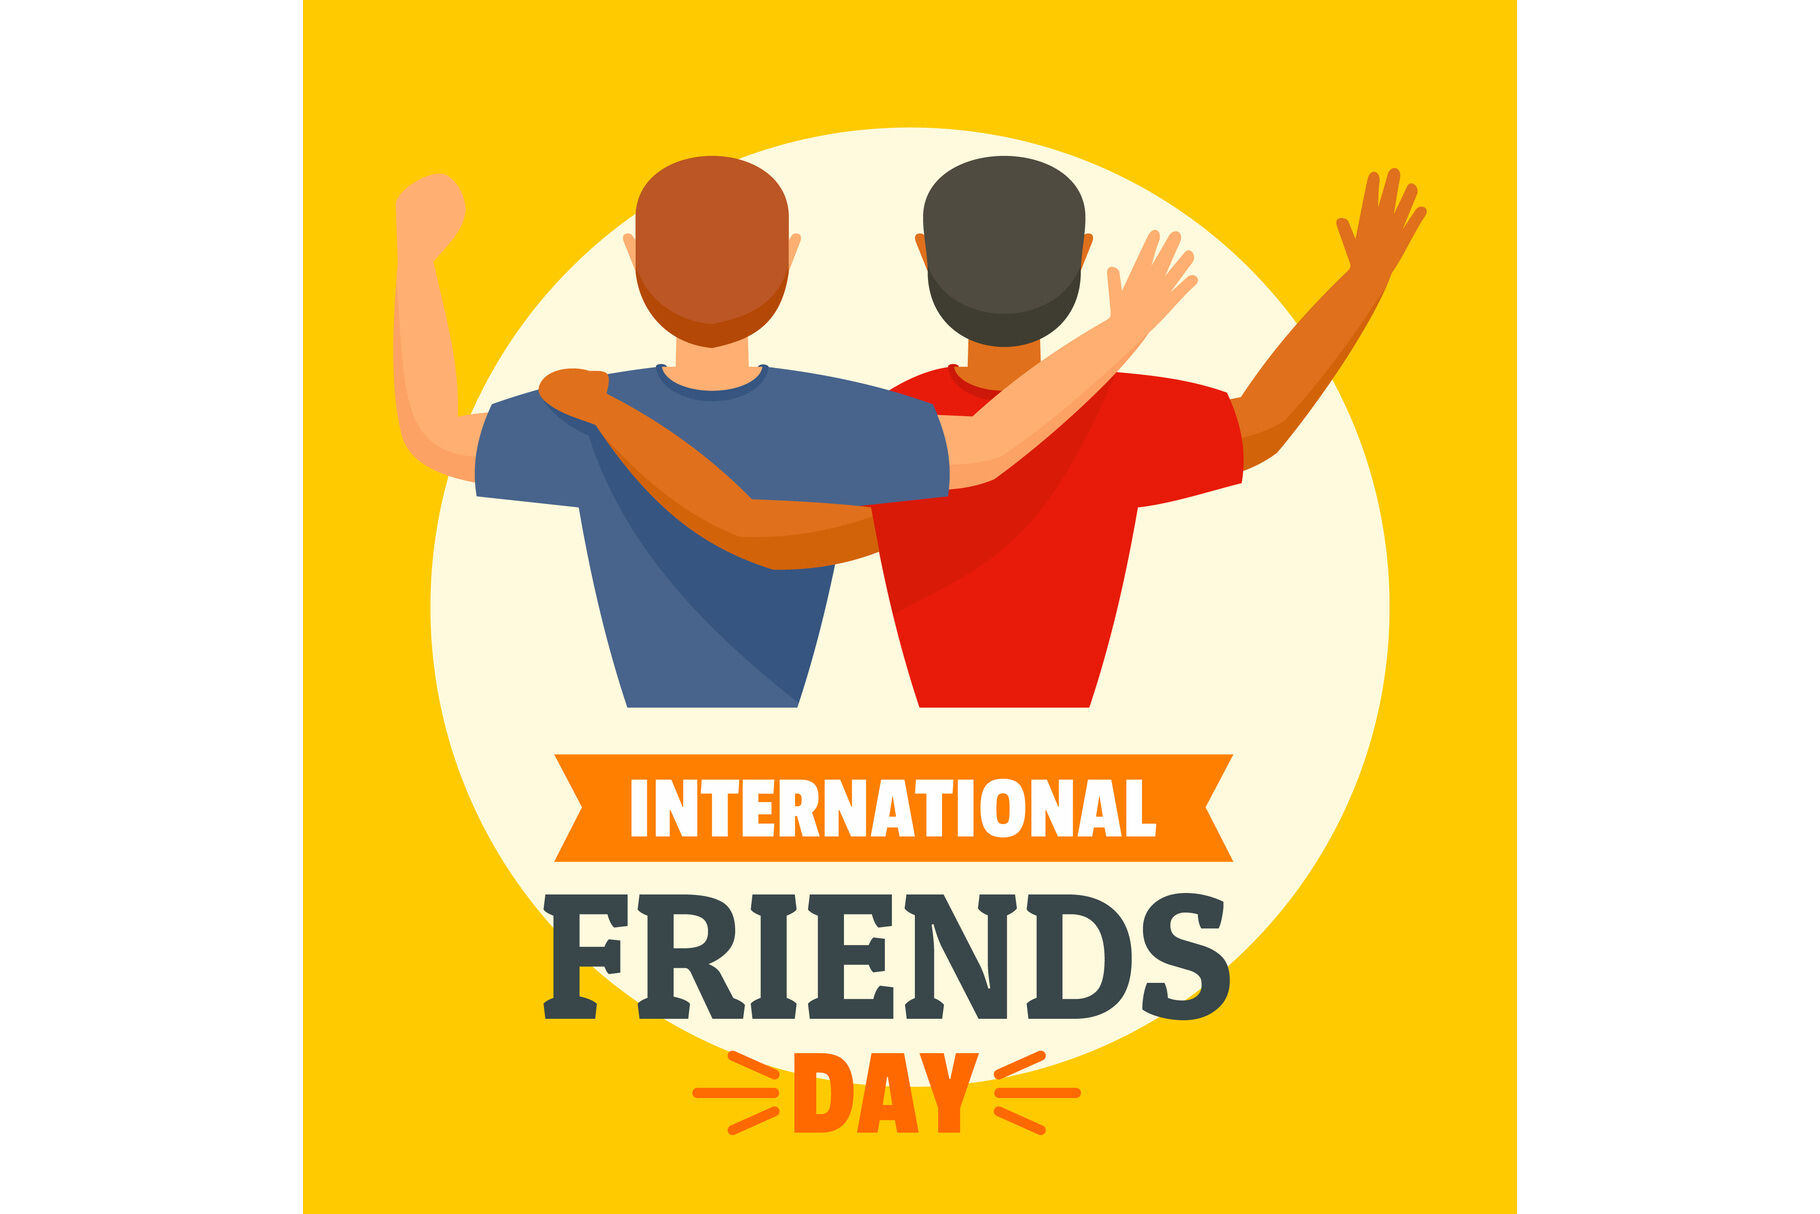 International friends day concept background, flat style By Anatolir56